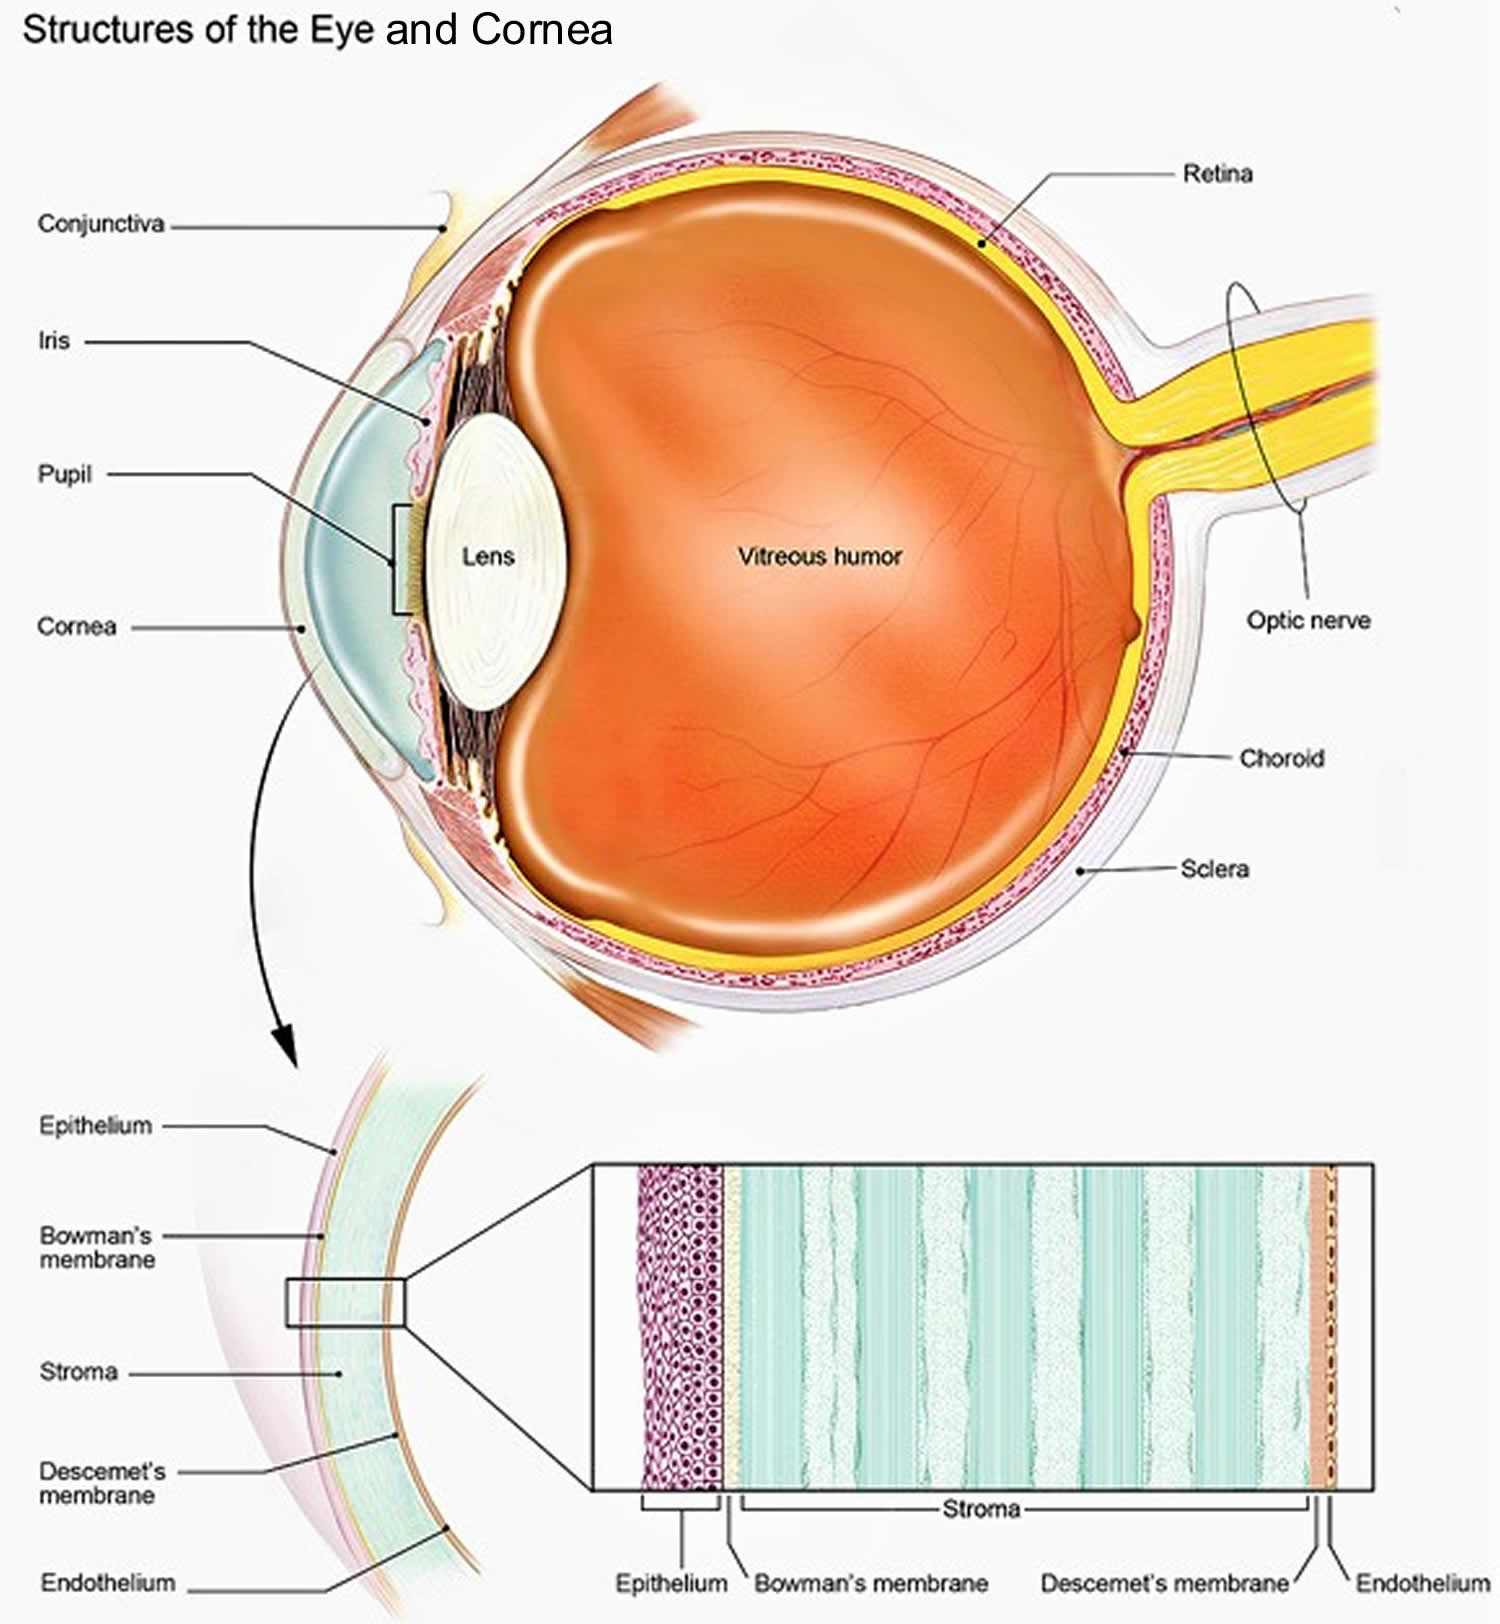 Structures of the cornea